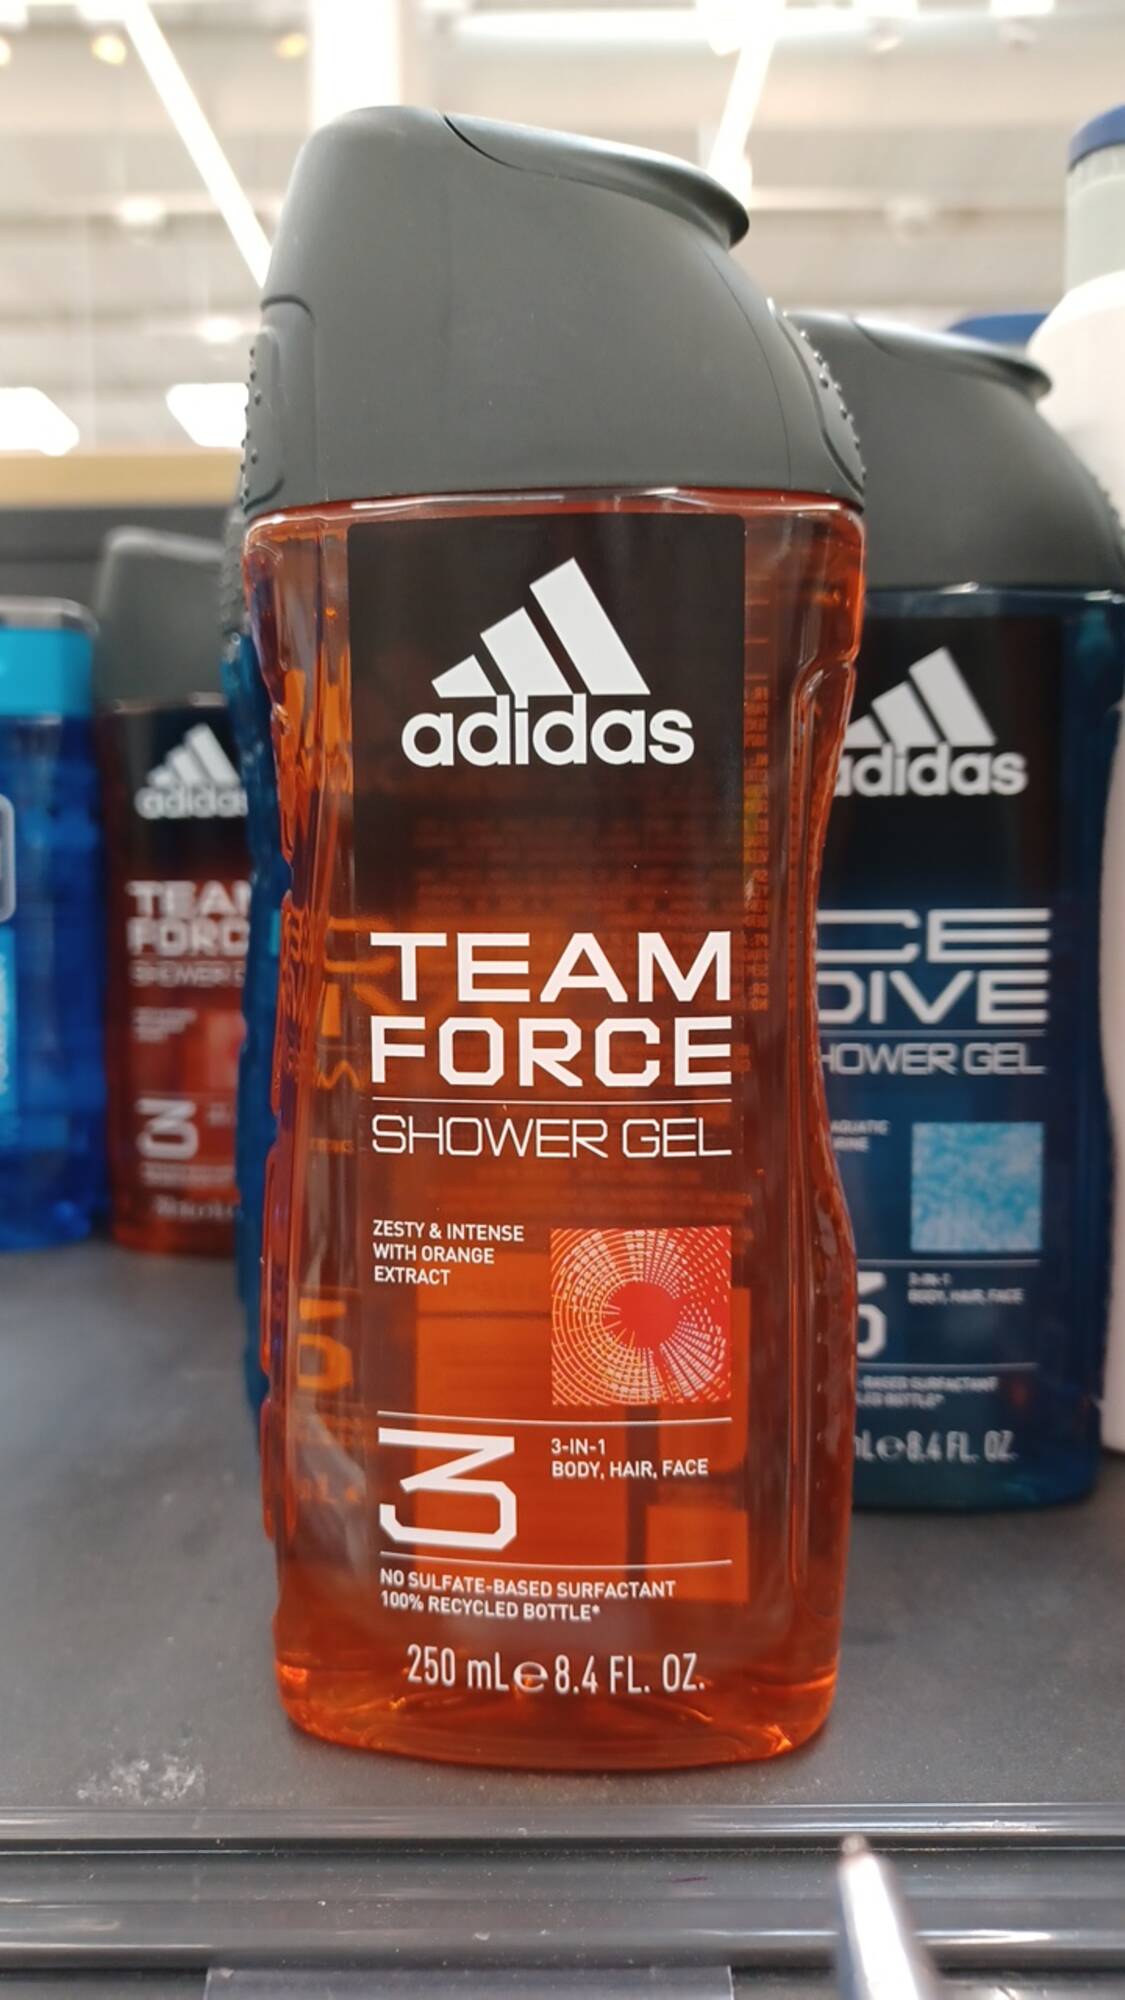 ADIDAS - Team force - Shower gel 3in1